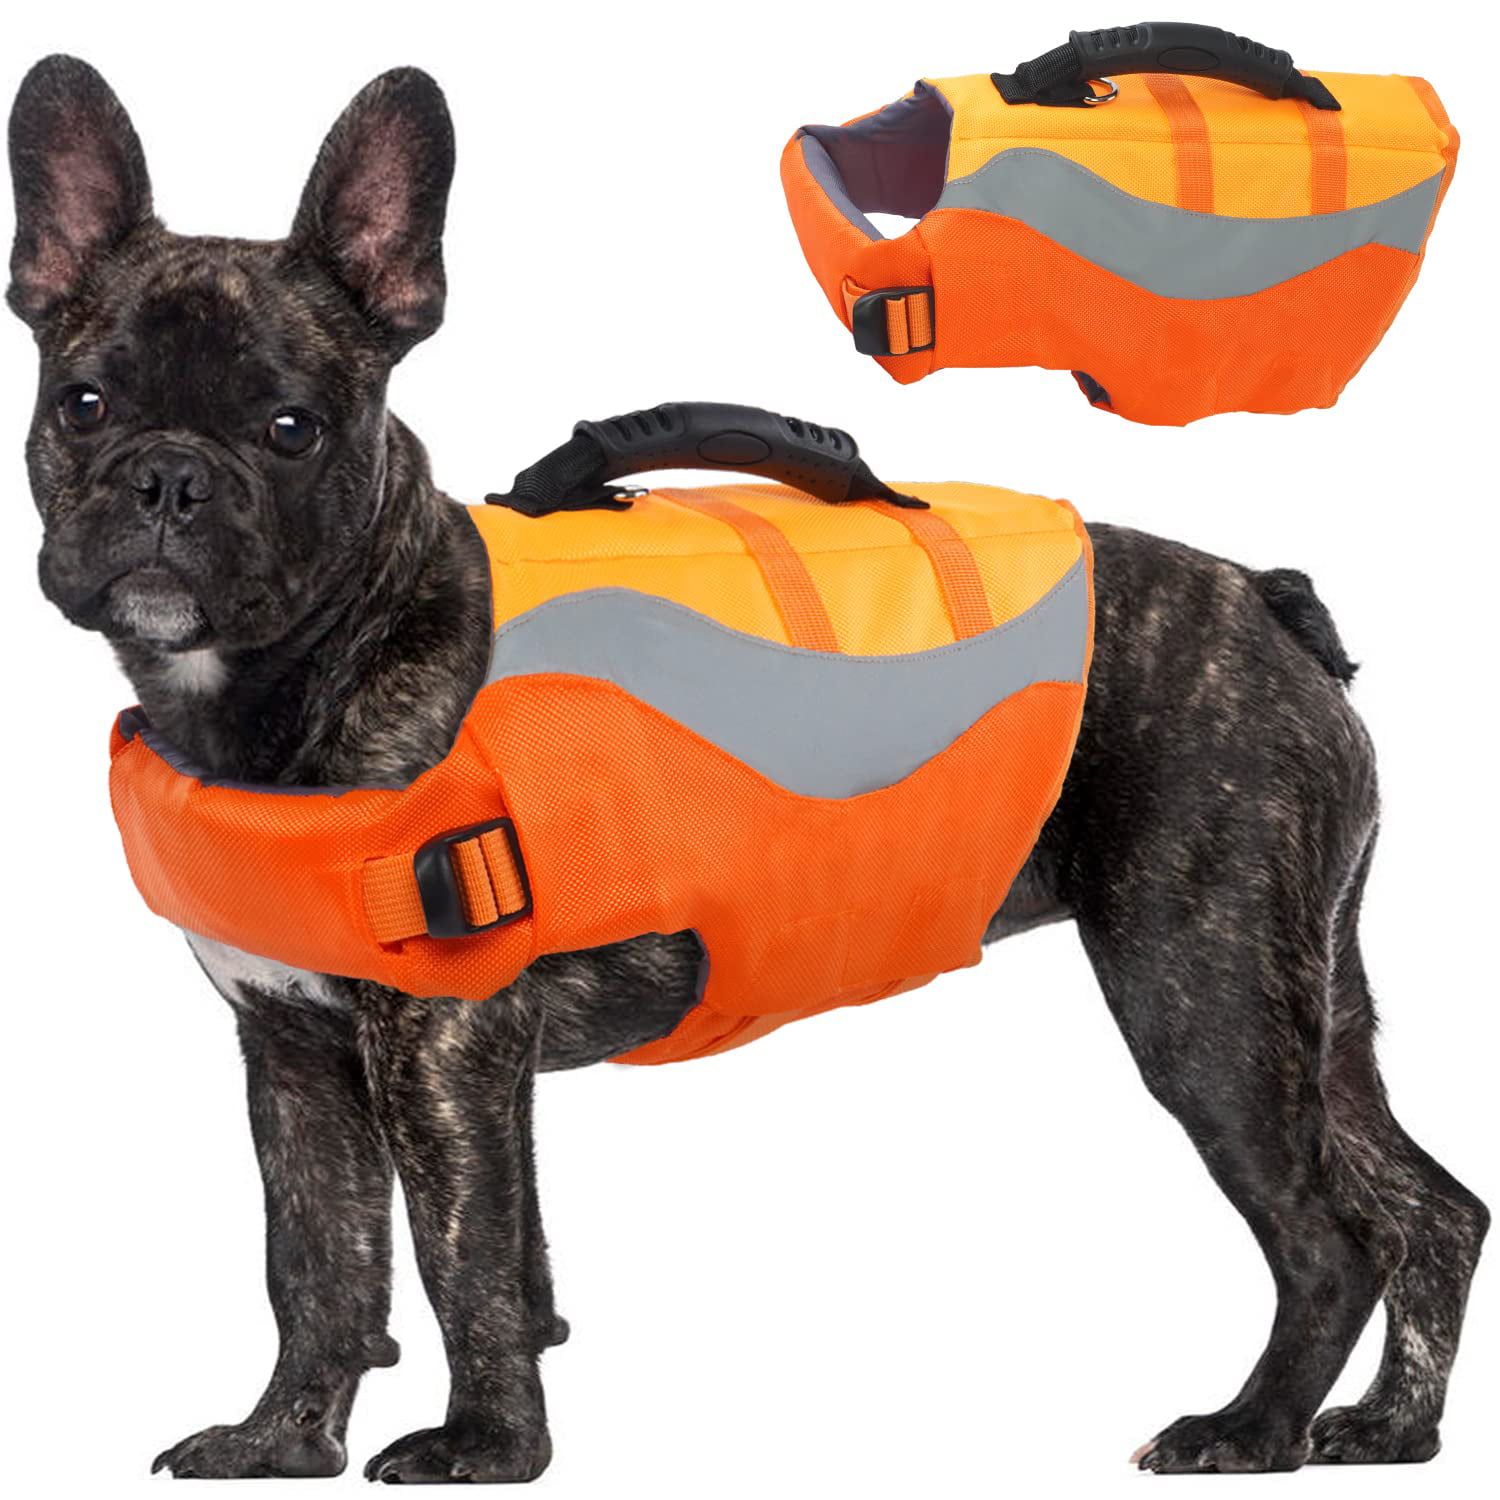 Dog Life Jacket Pet Preserver Vest，Portable Dog Swimsuit Lifesaver Vest with Rescue Handle for Small Medium Large Breed Dogs， Adjustable Dog Safety Floatation Vest for Boating Kayaking Swimming 